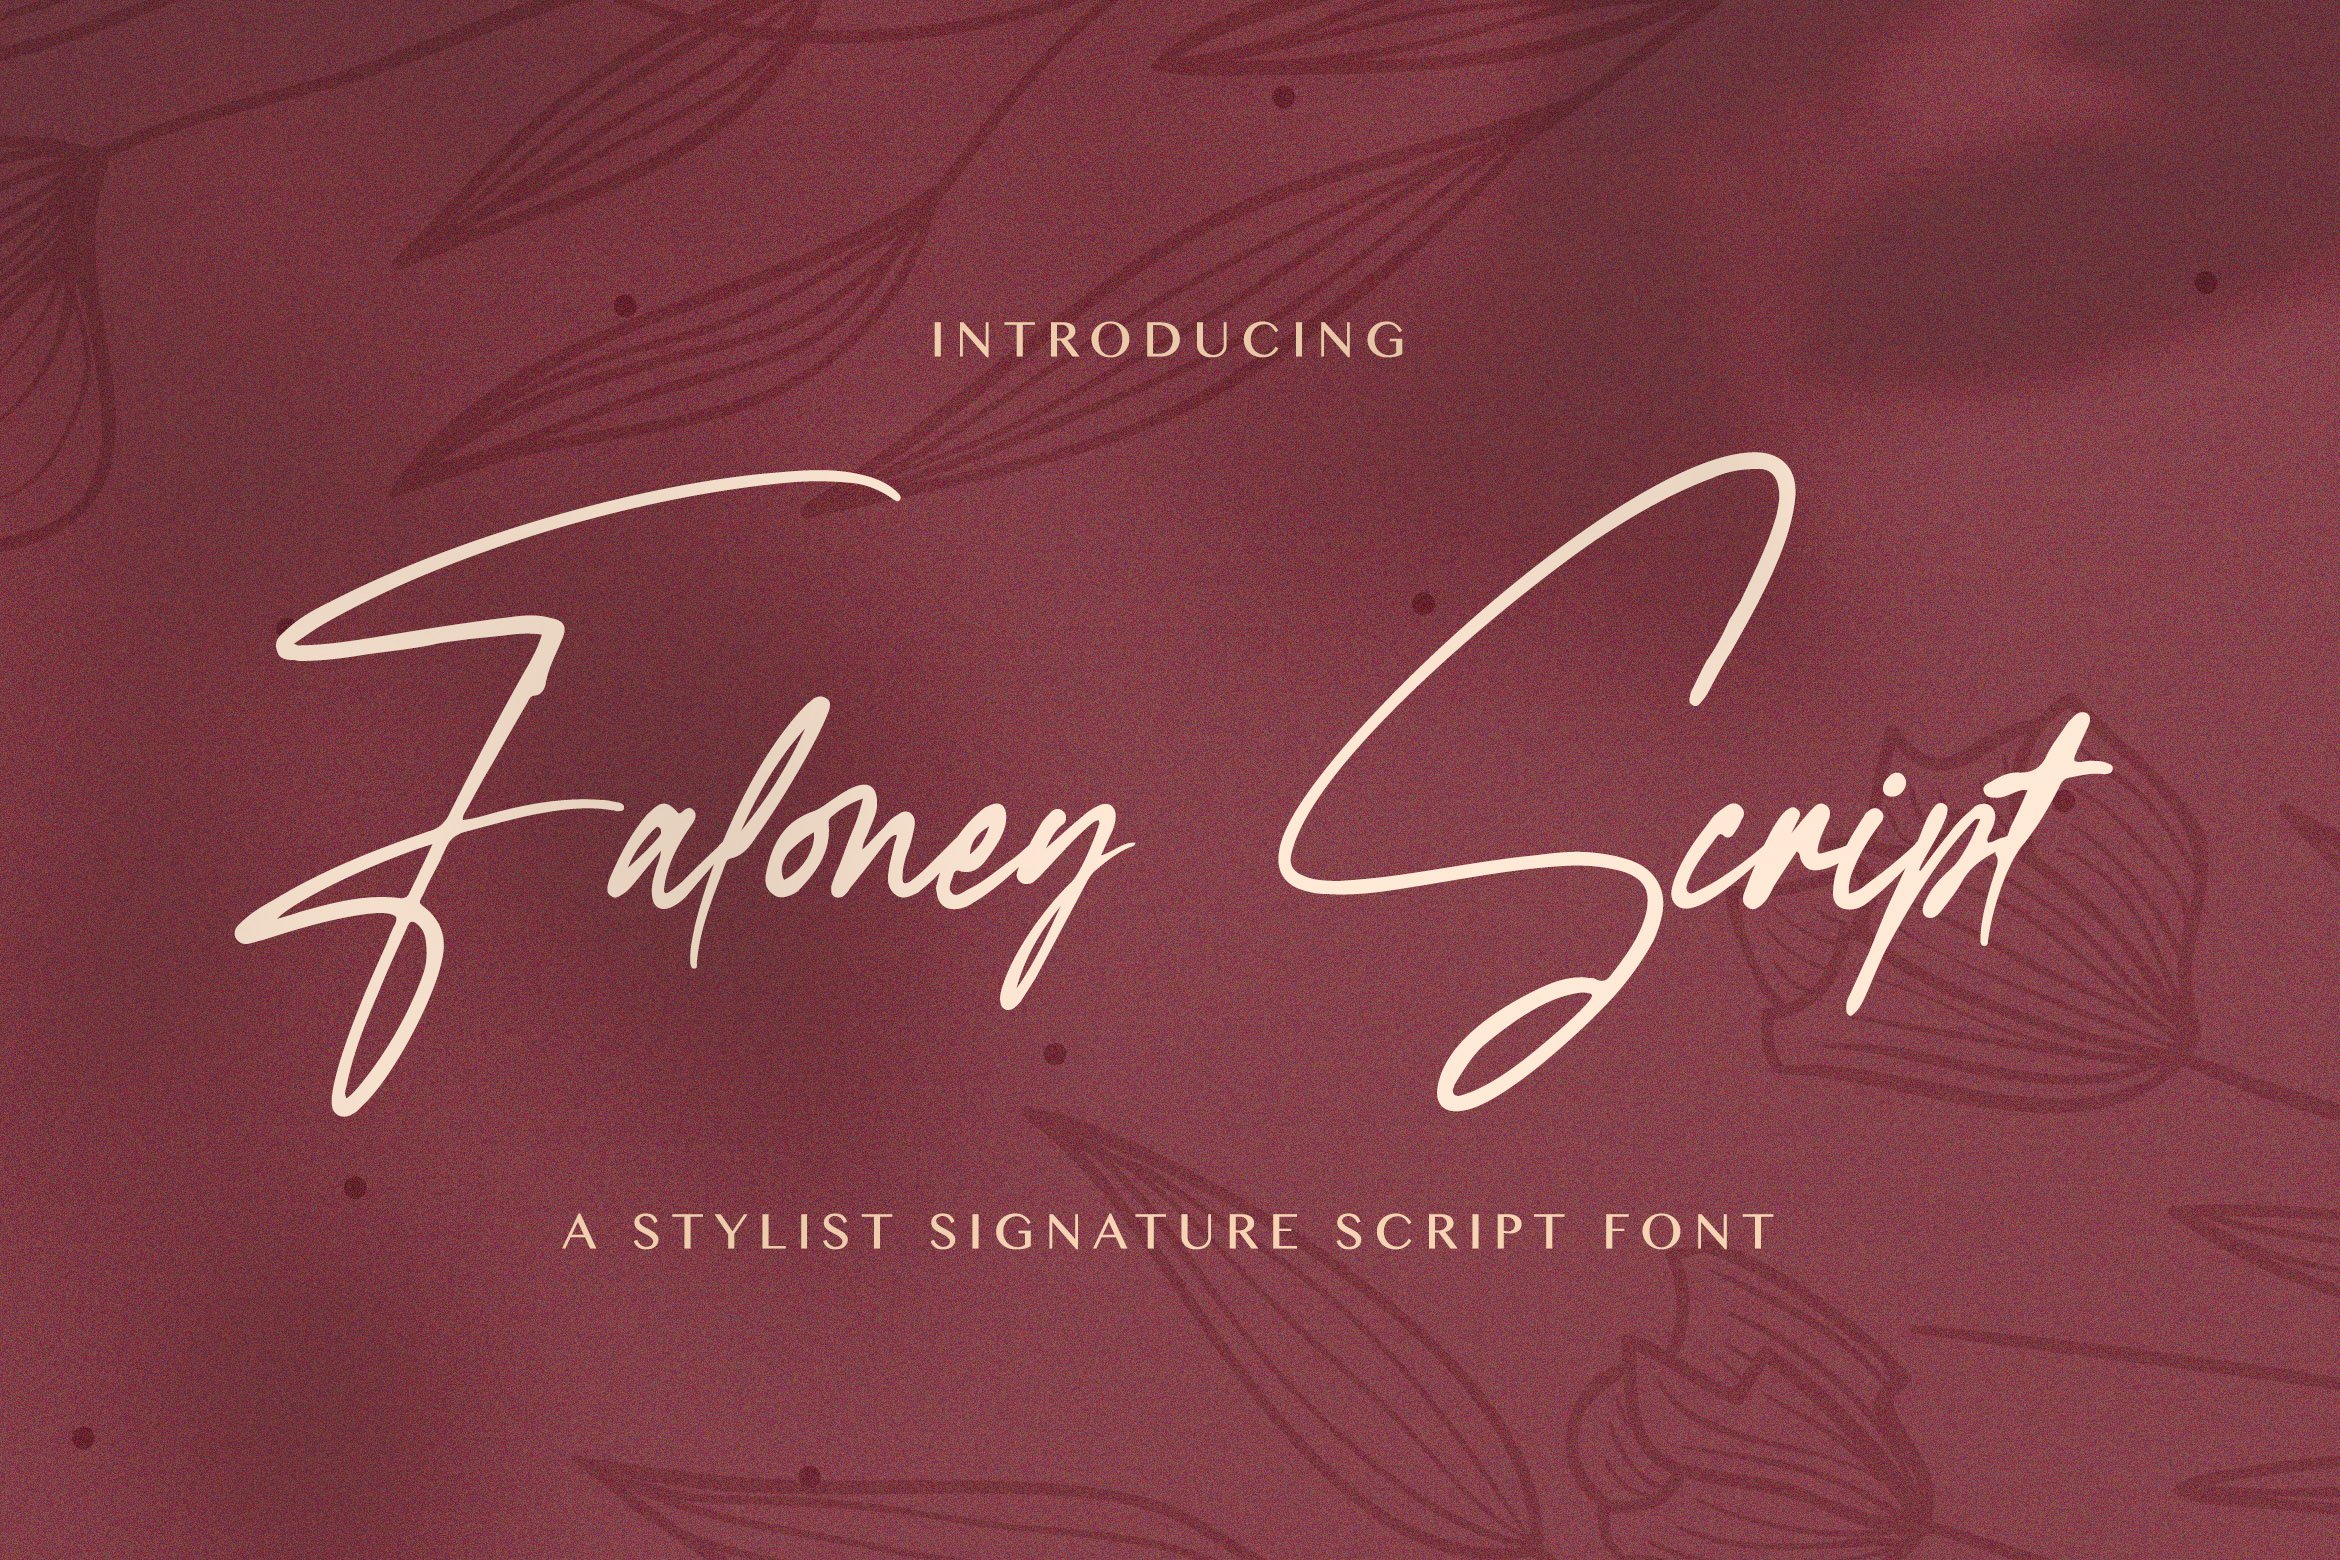 Faloney Script - Handwritten Font cover image.